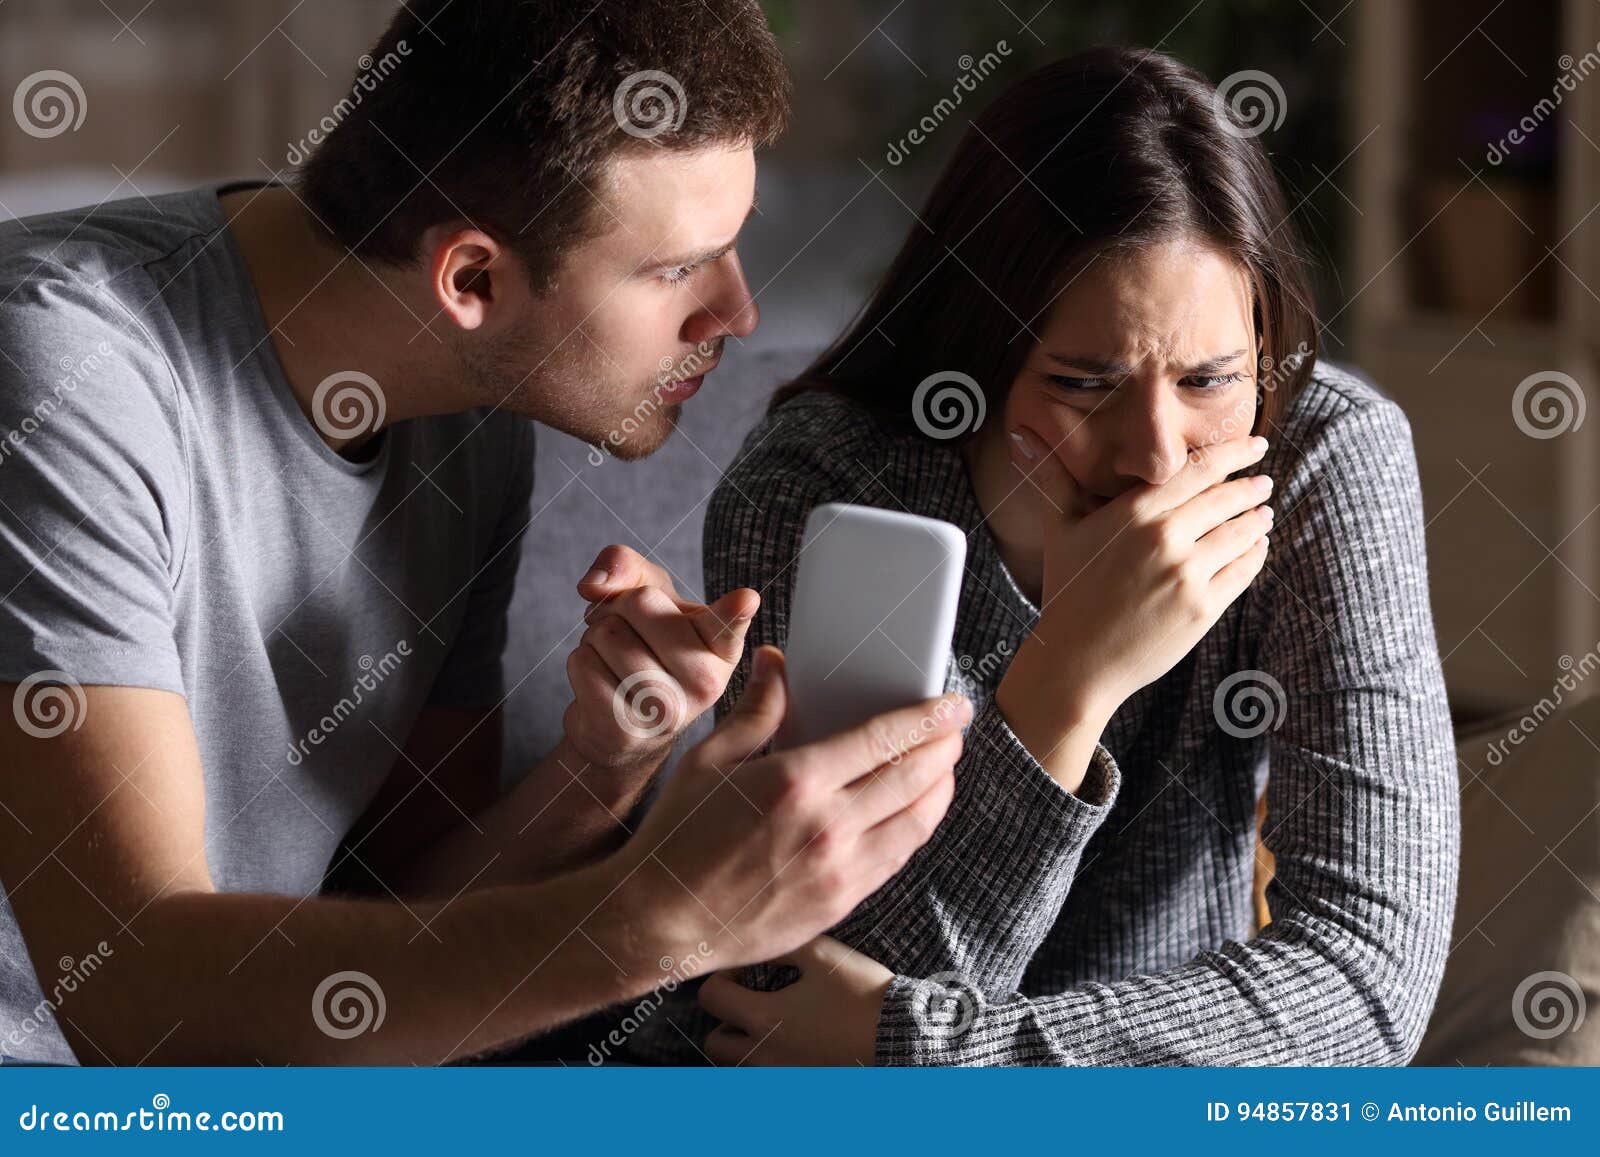 boyfriend show phone to his cheater girlfriend